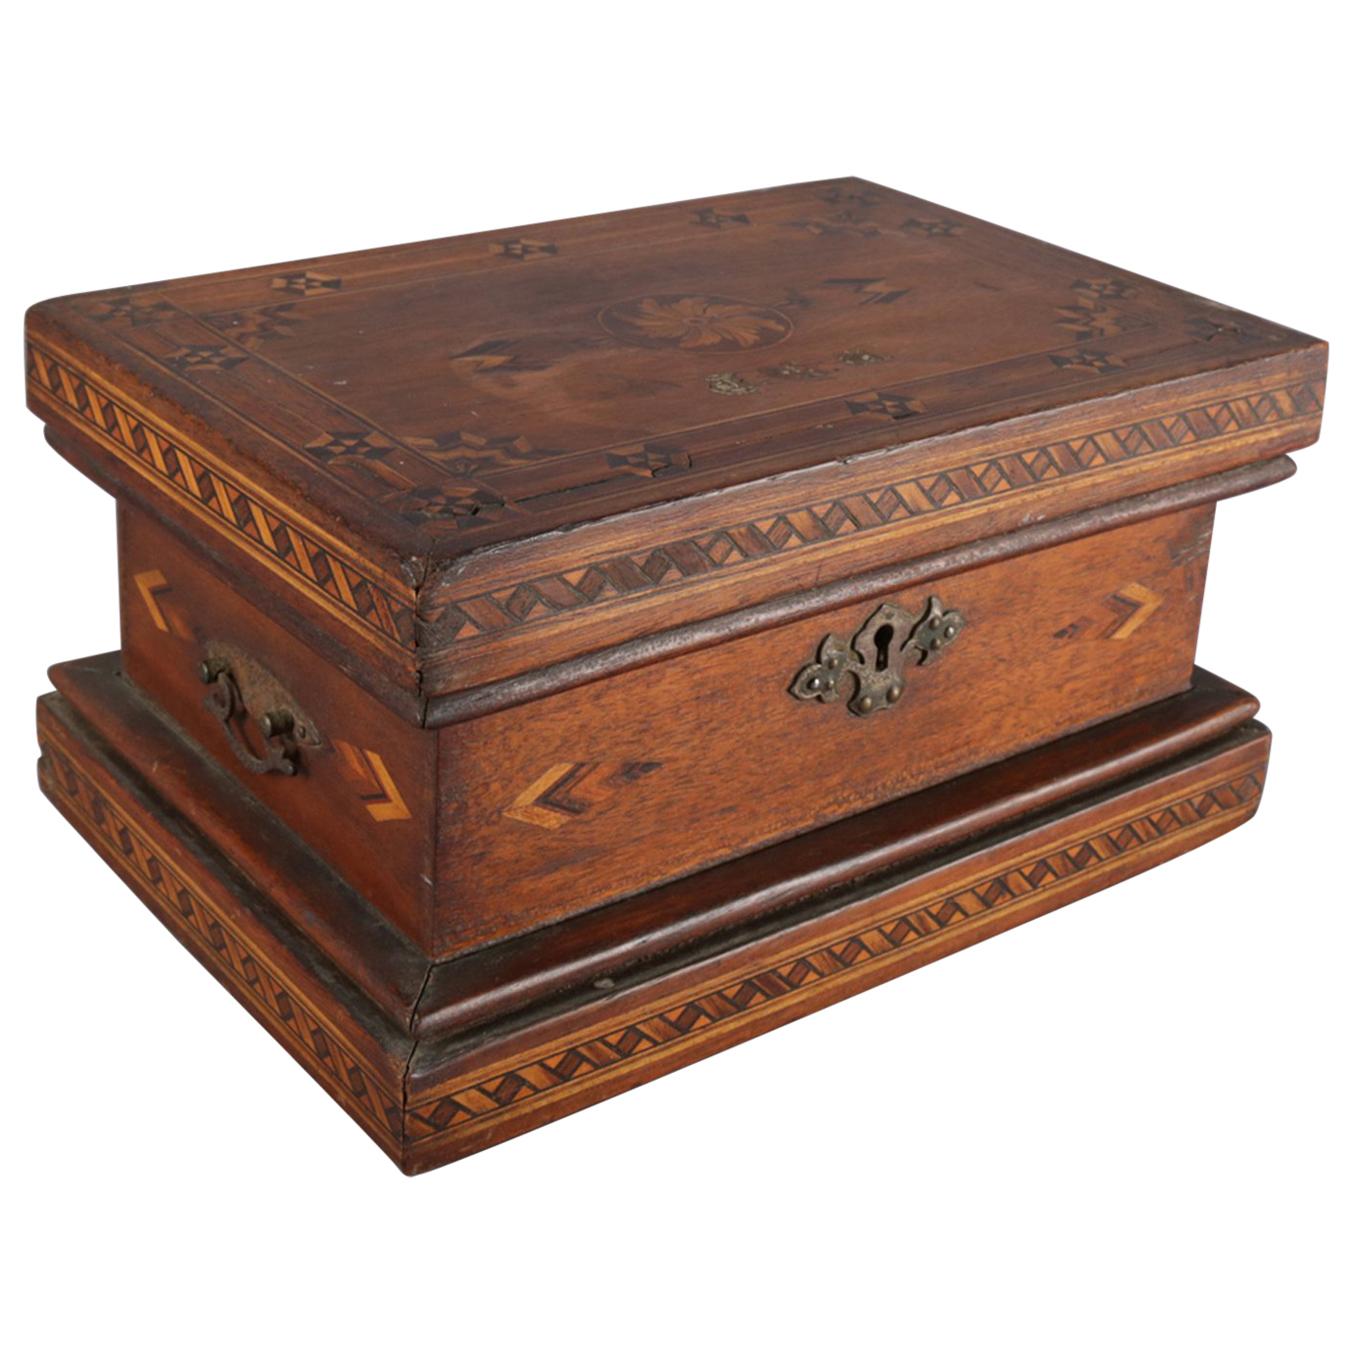 Antique English Inlaid Parquetry Petite Humidor Cigar Box, 19th Century